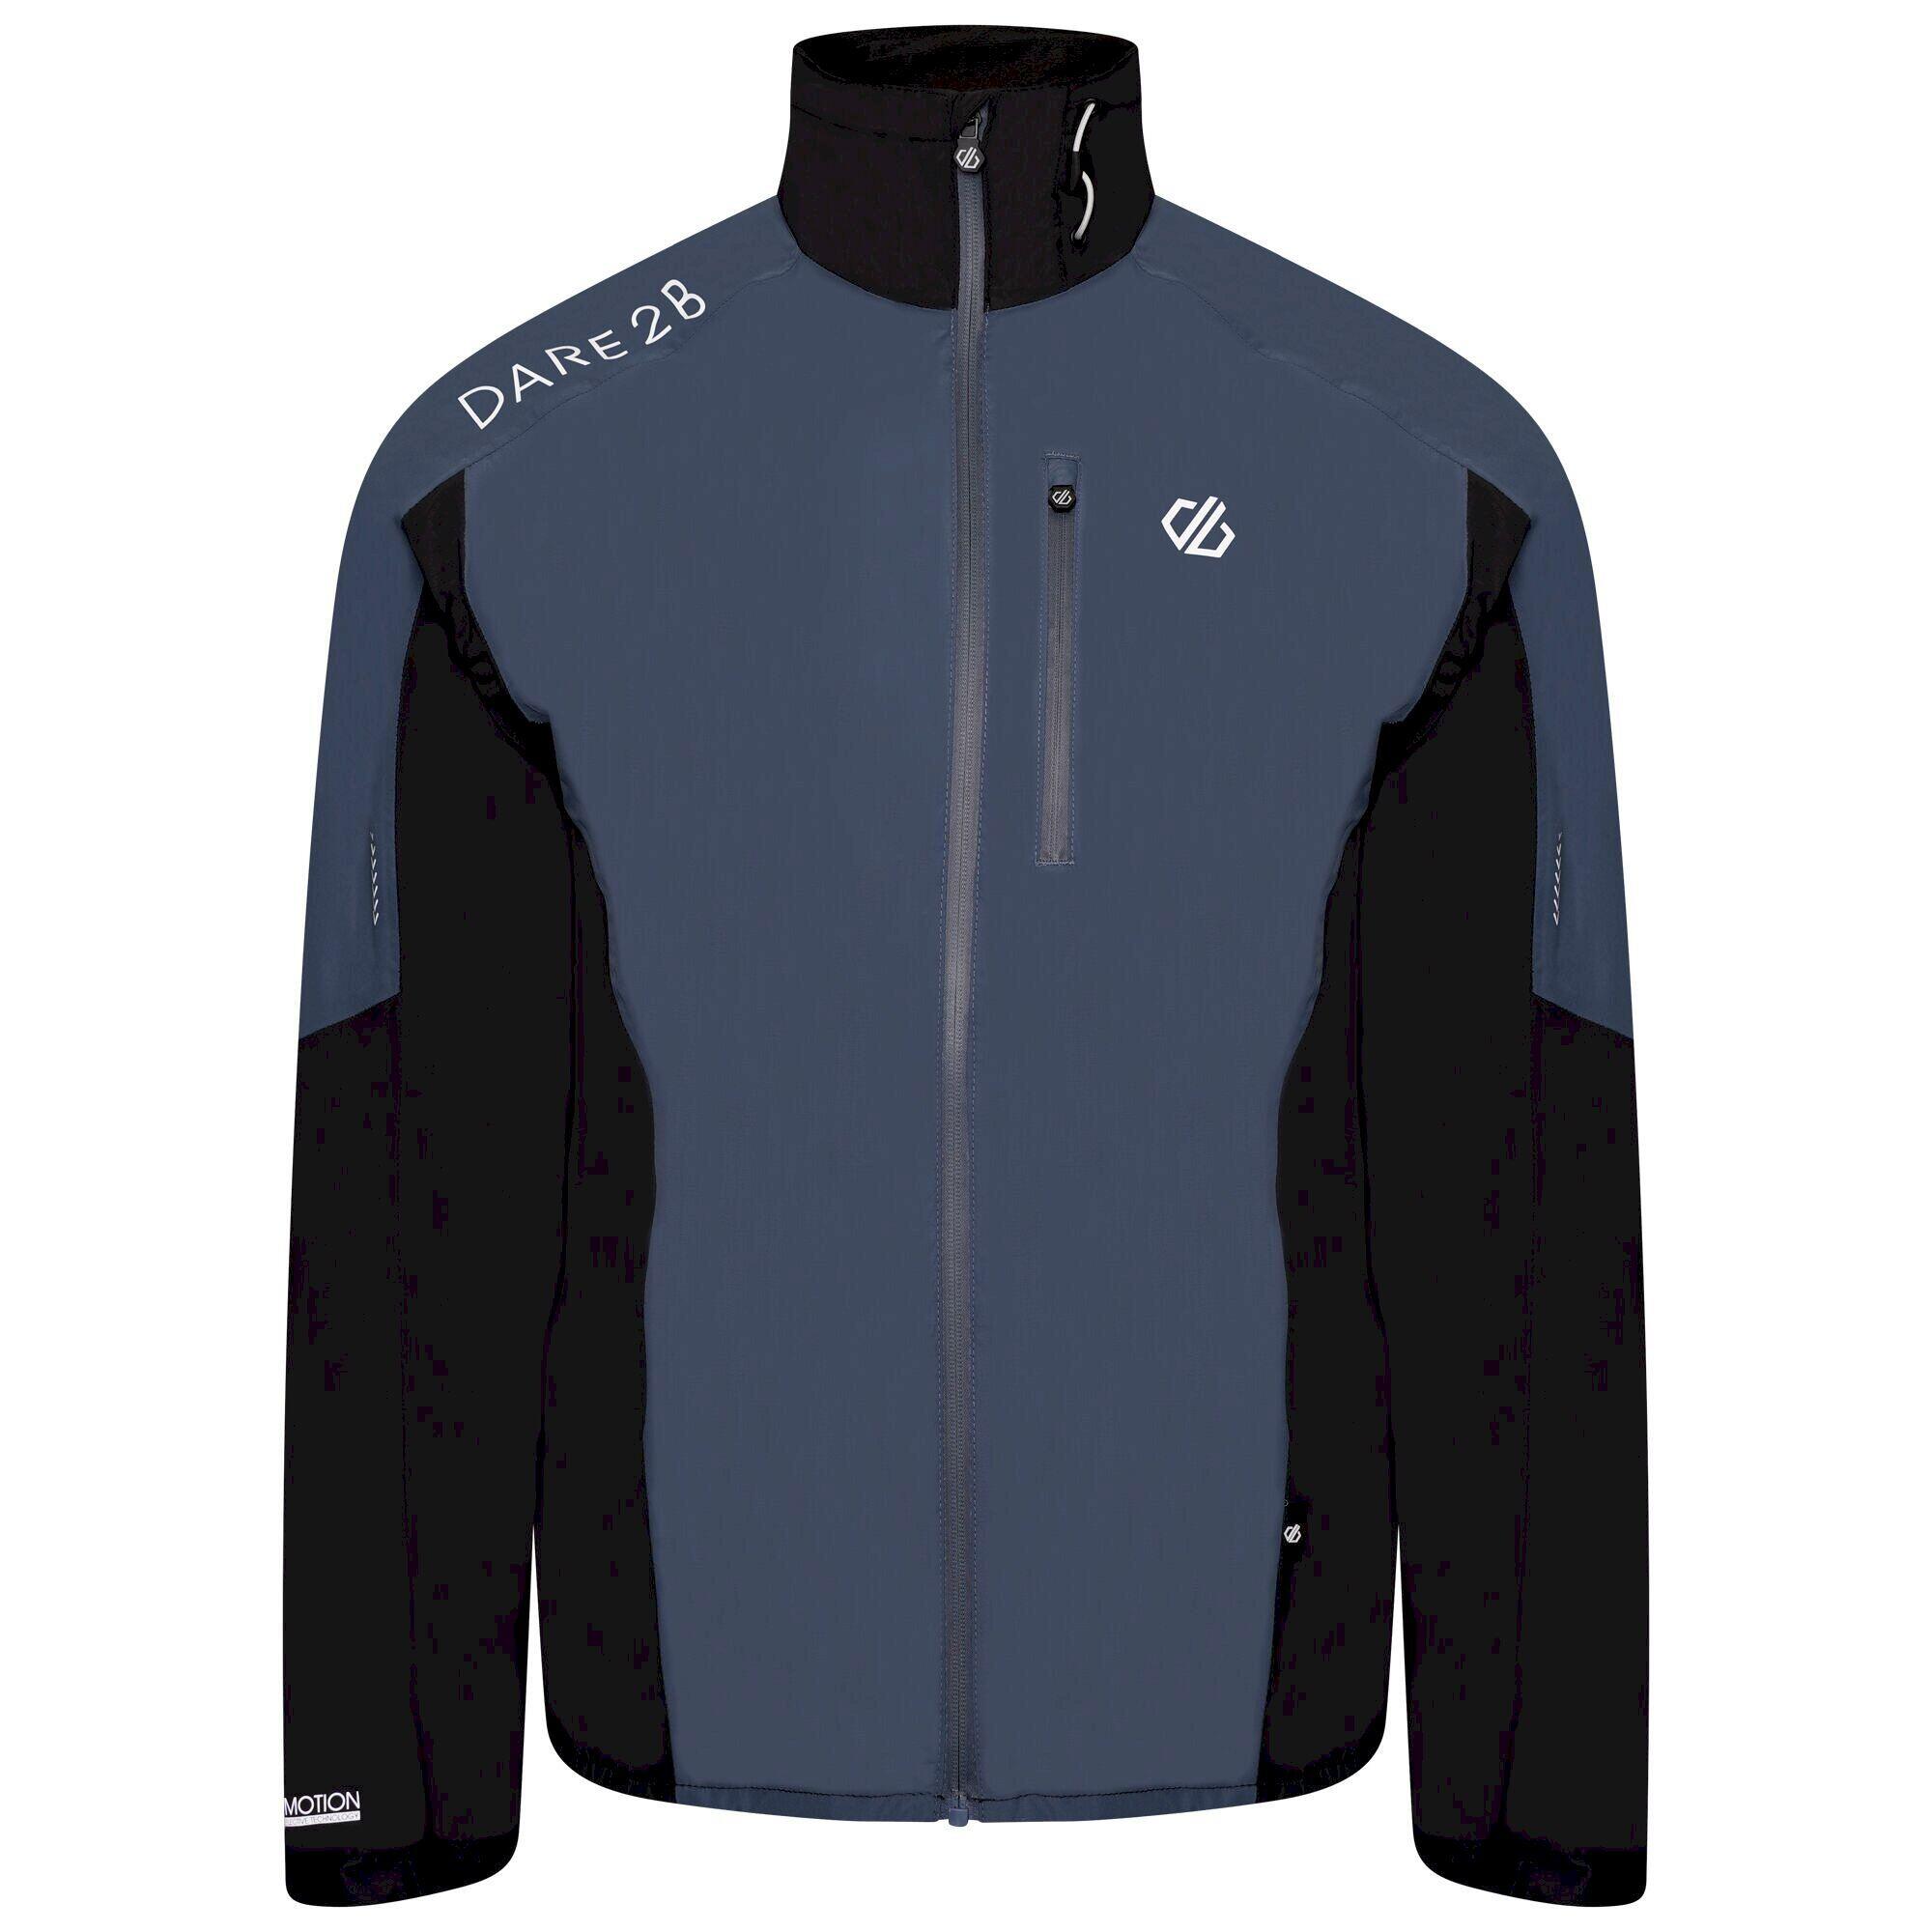 DARE 2B Mens Mediant II Cycling Jacket (Orion Grey/Black)